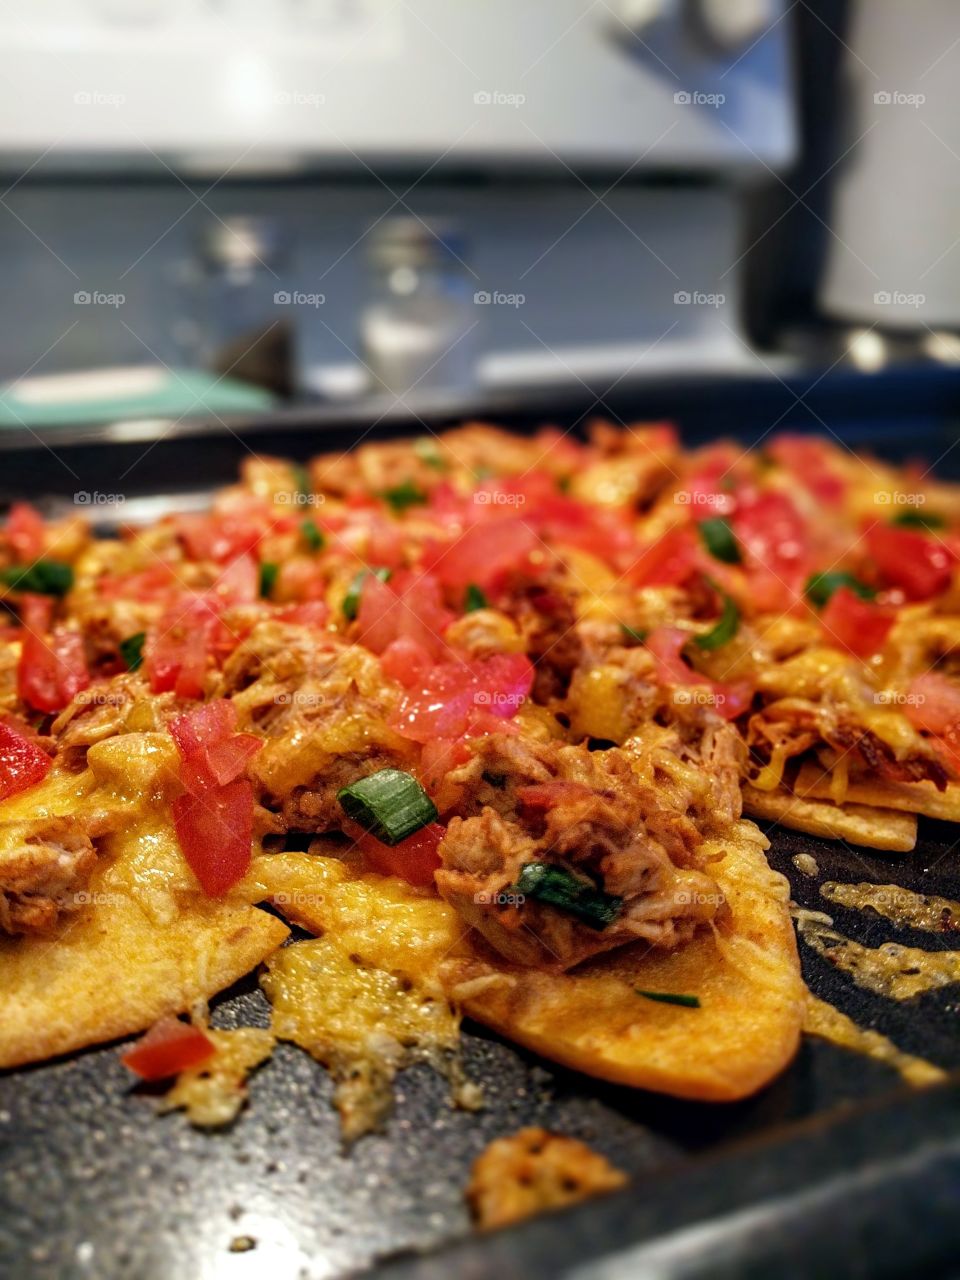 Homemade tortilla chips + nachos